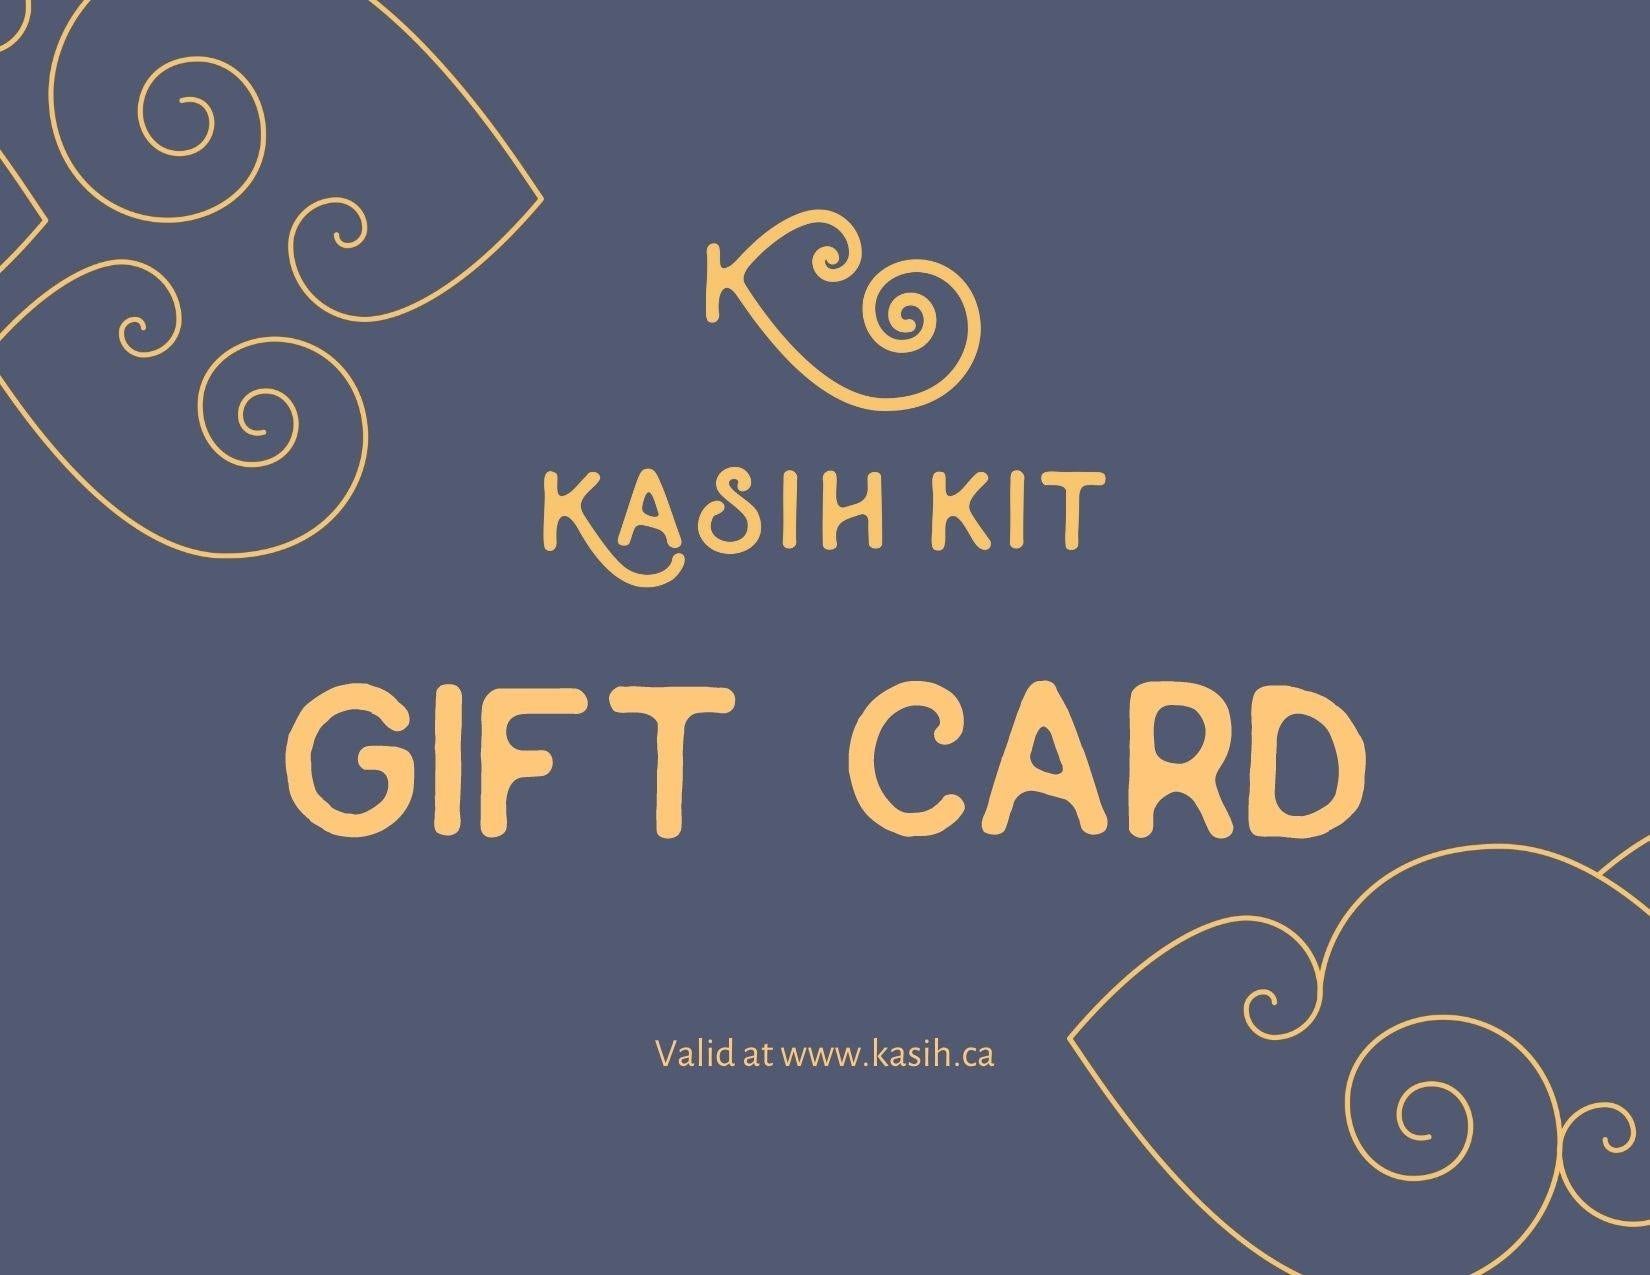 Kasih Kit Gift Card - Kasih Kit